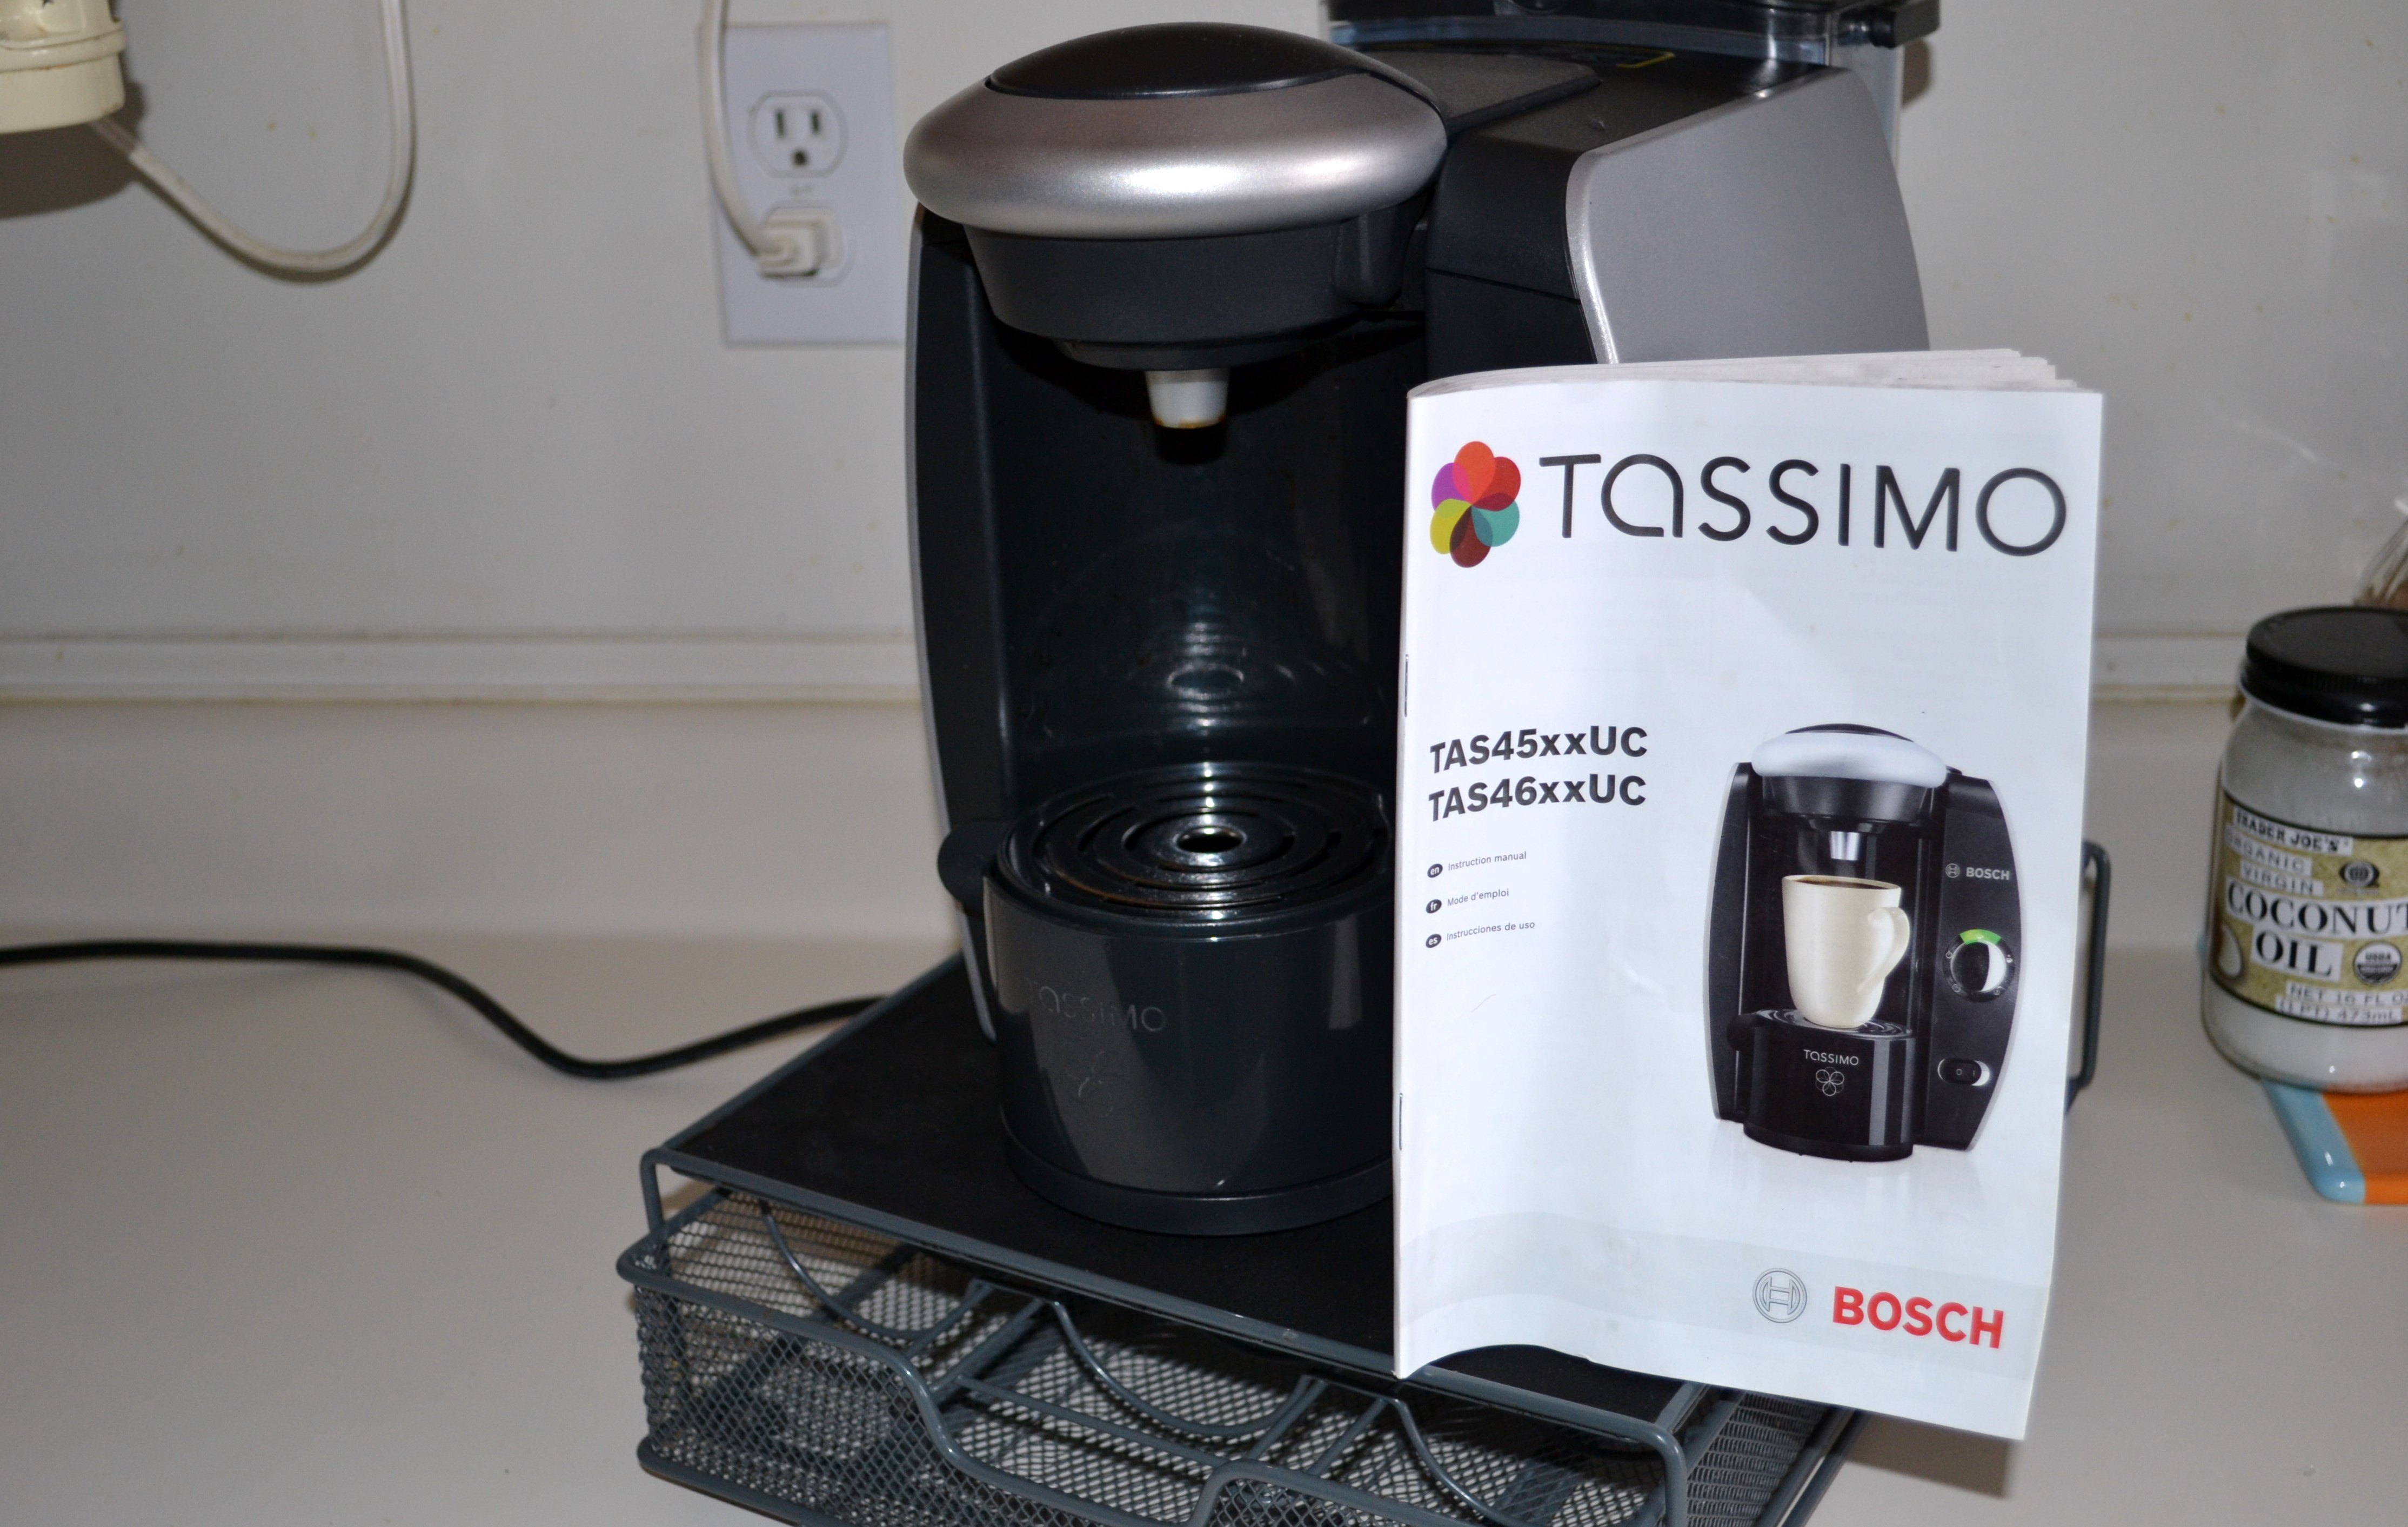 Tassimo single serve coffee maker made by Bosch